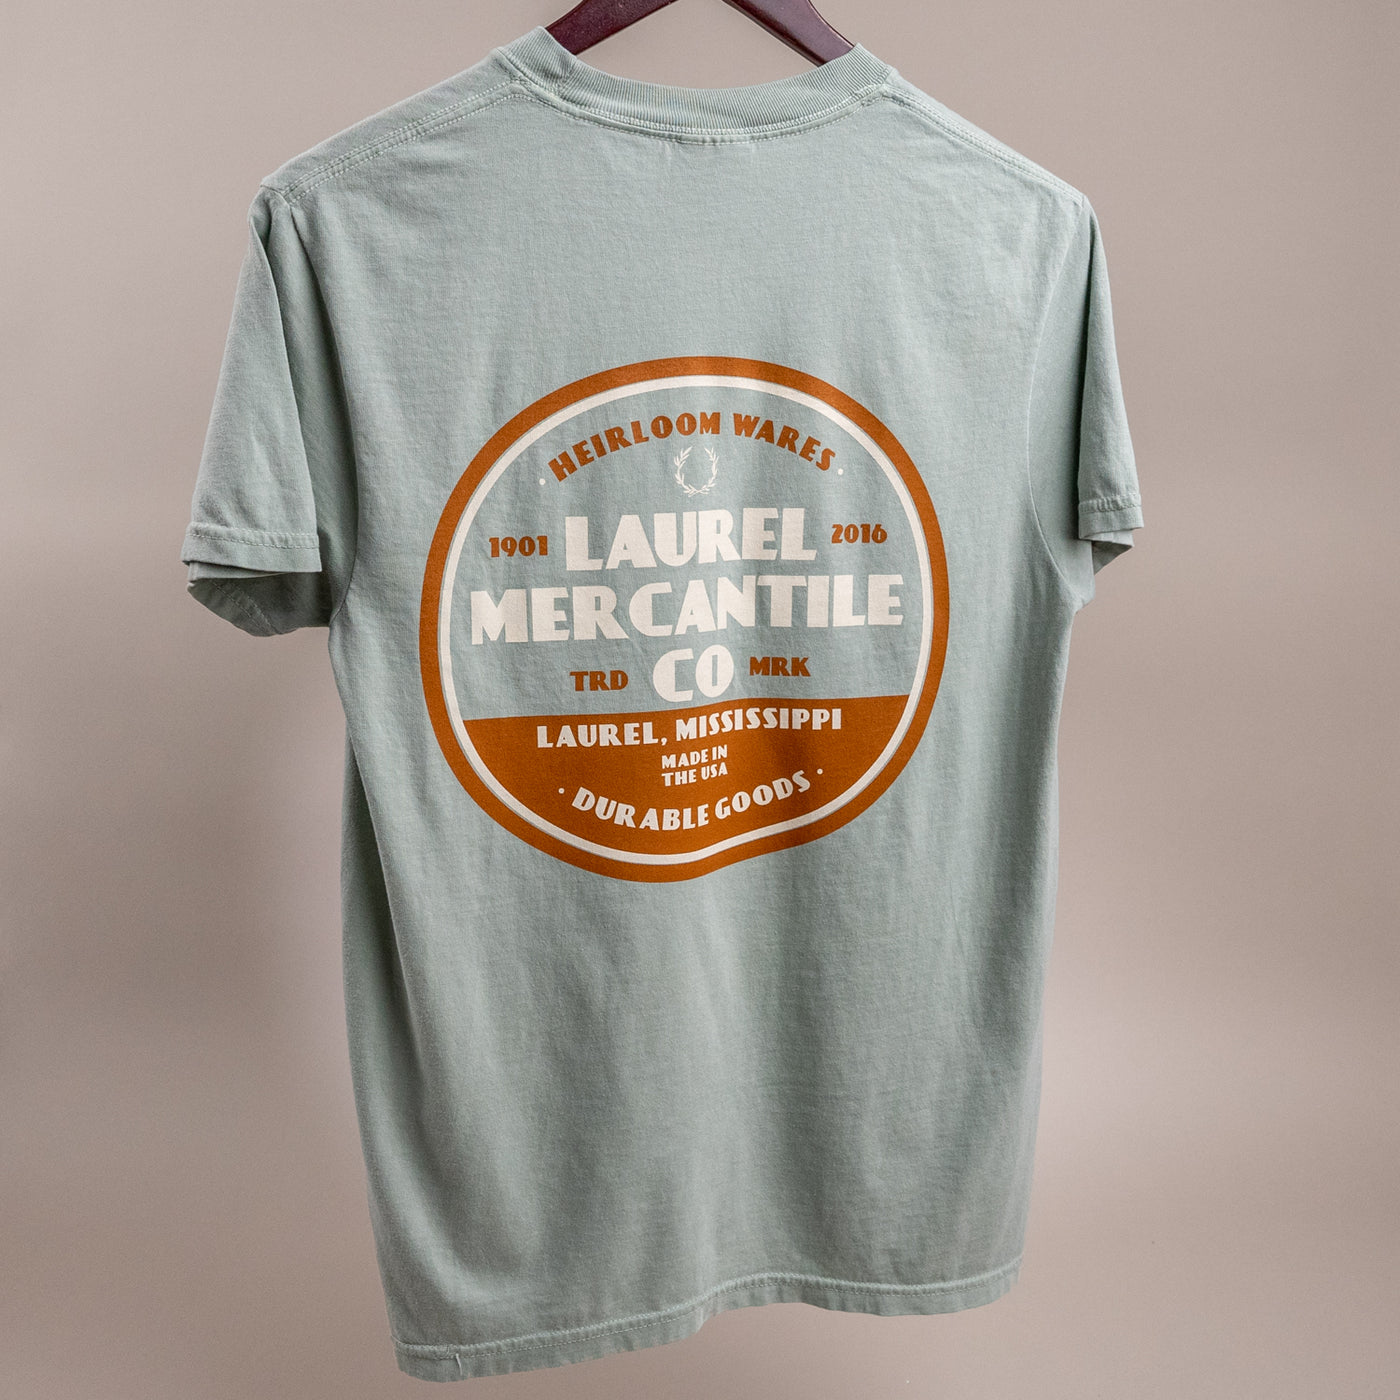 LMCo. Retro Oval T-Shirt